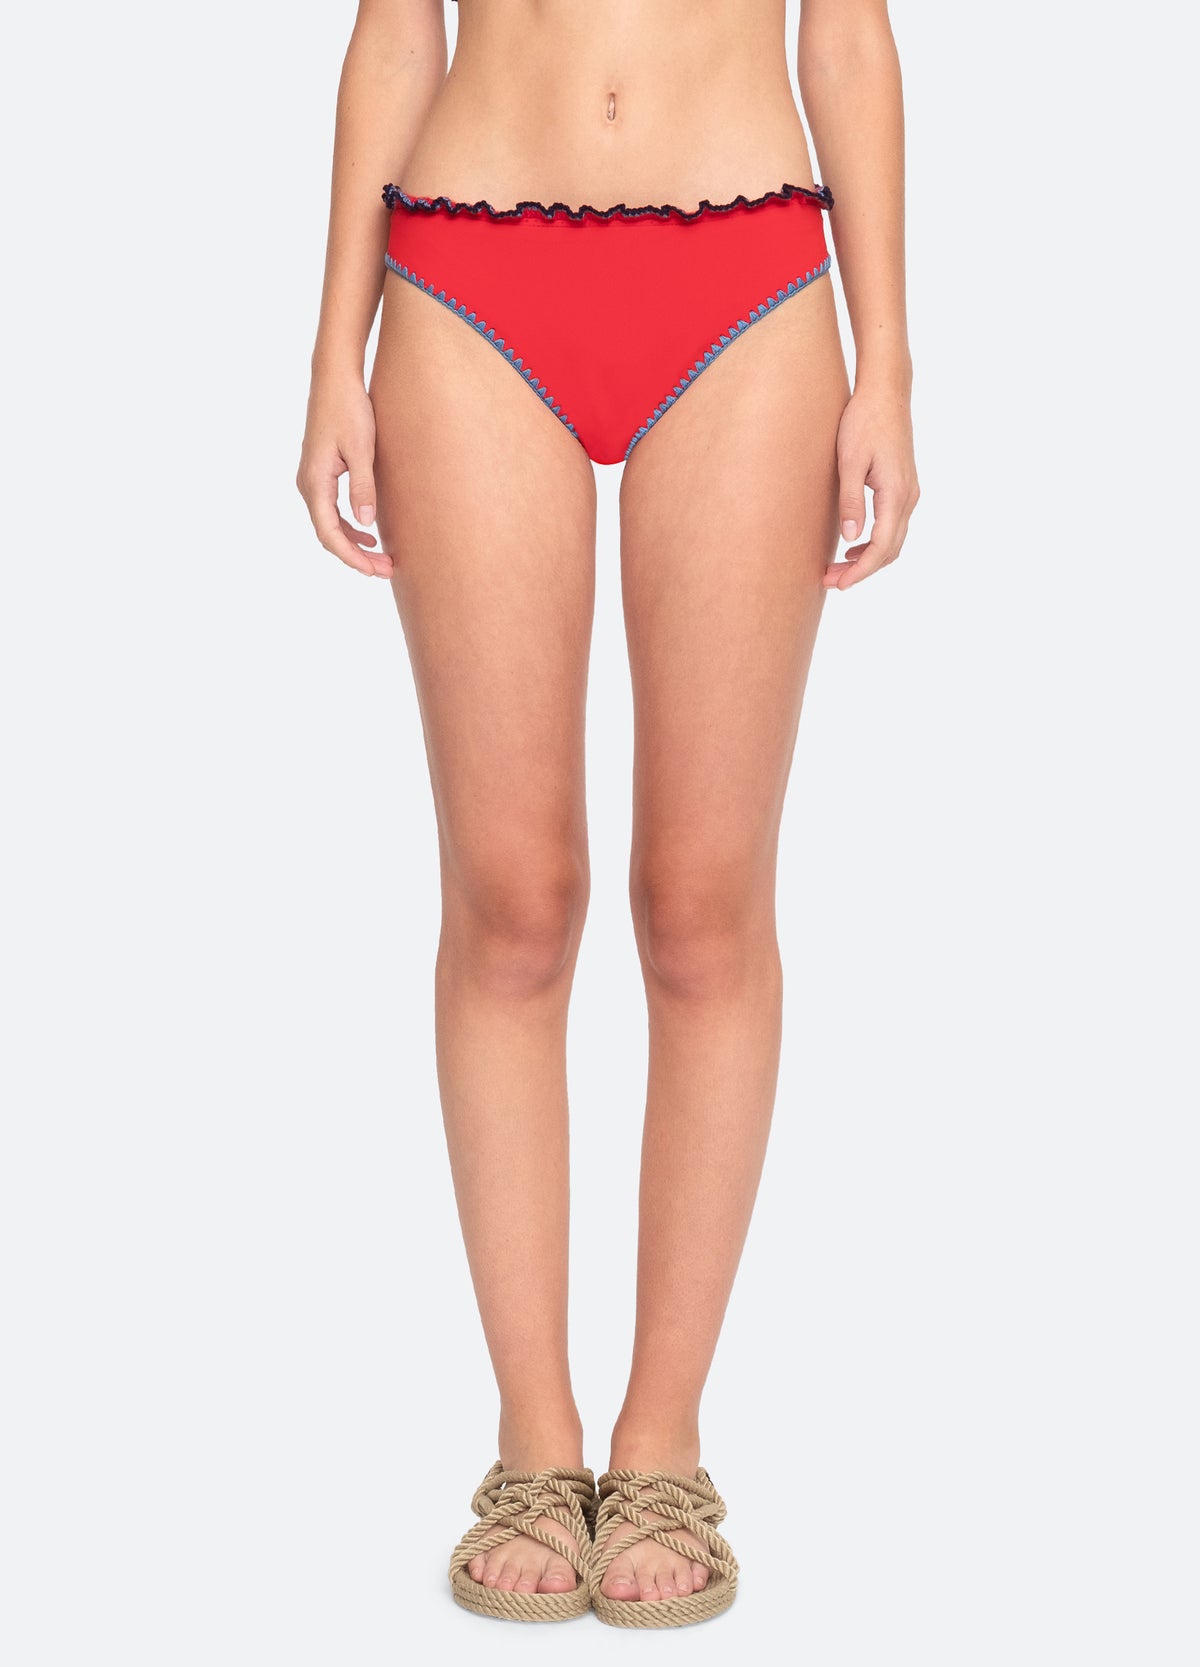 scarlet-lemika bikini bottom-front view